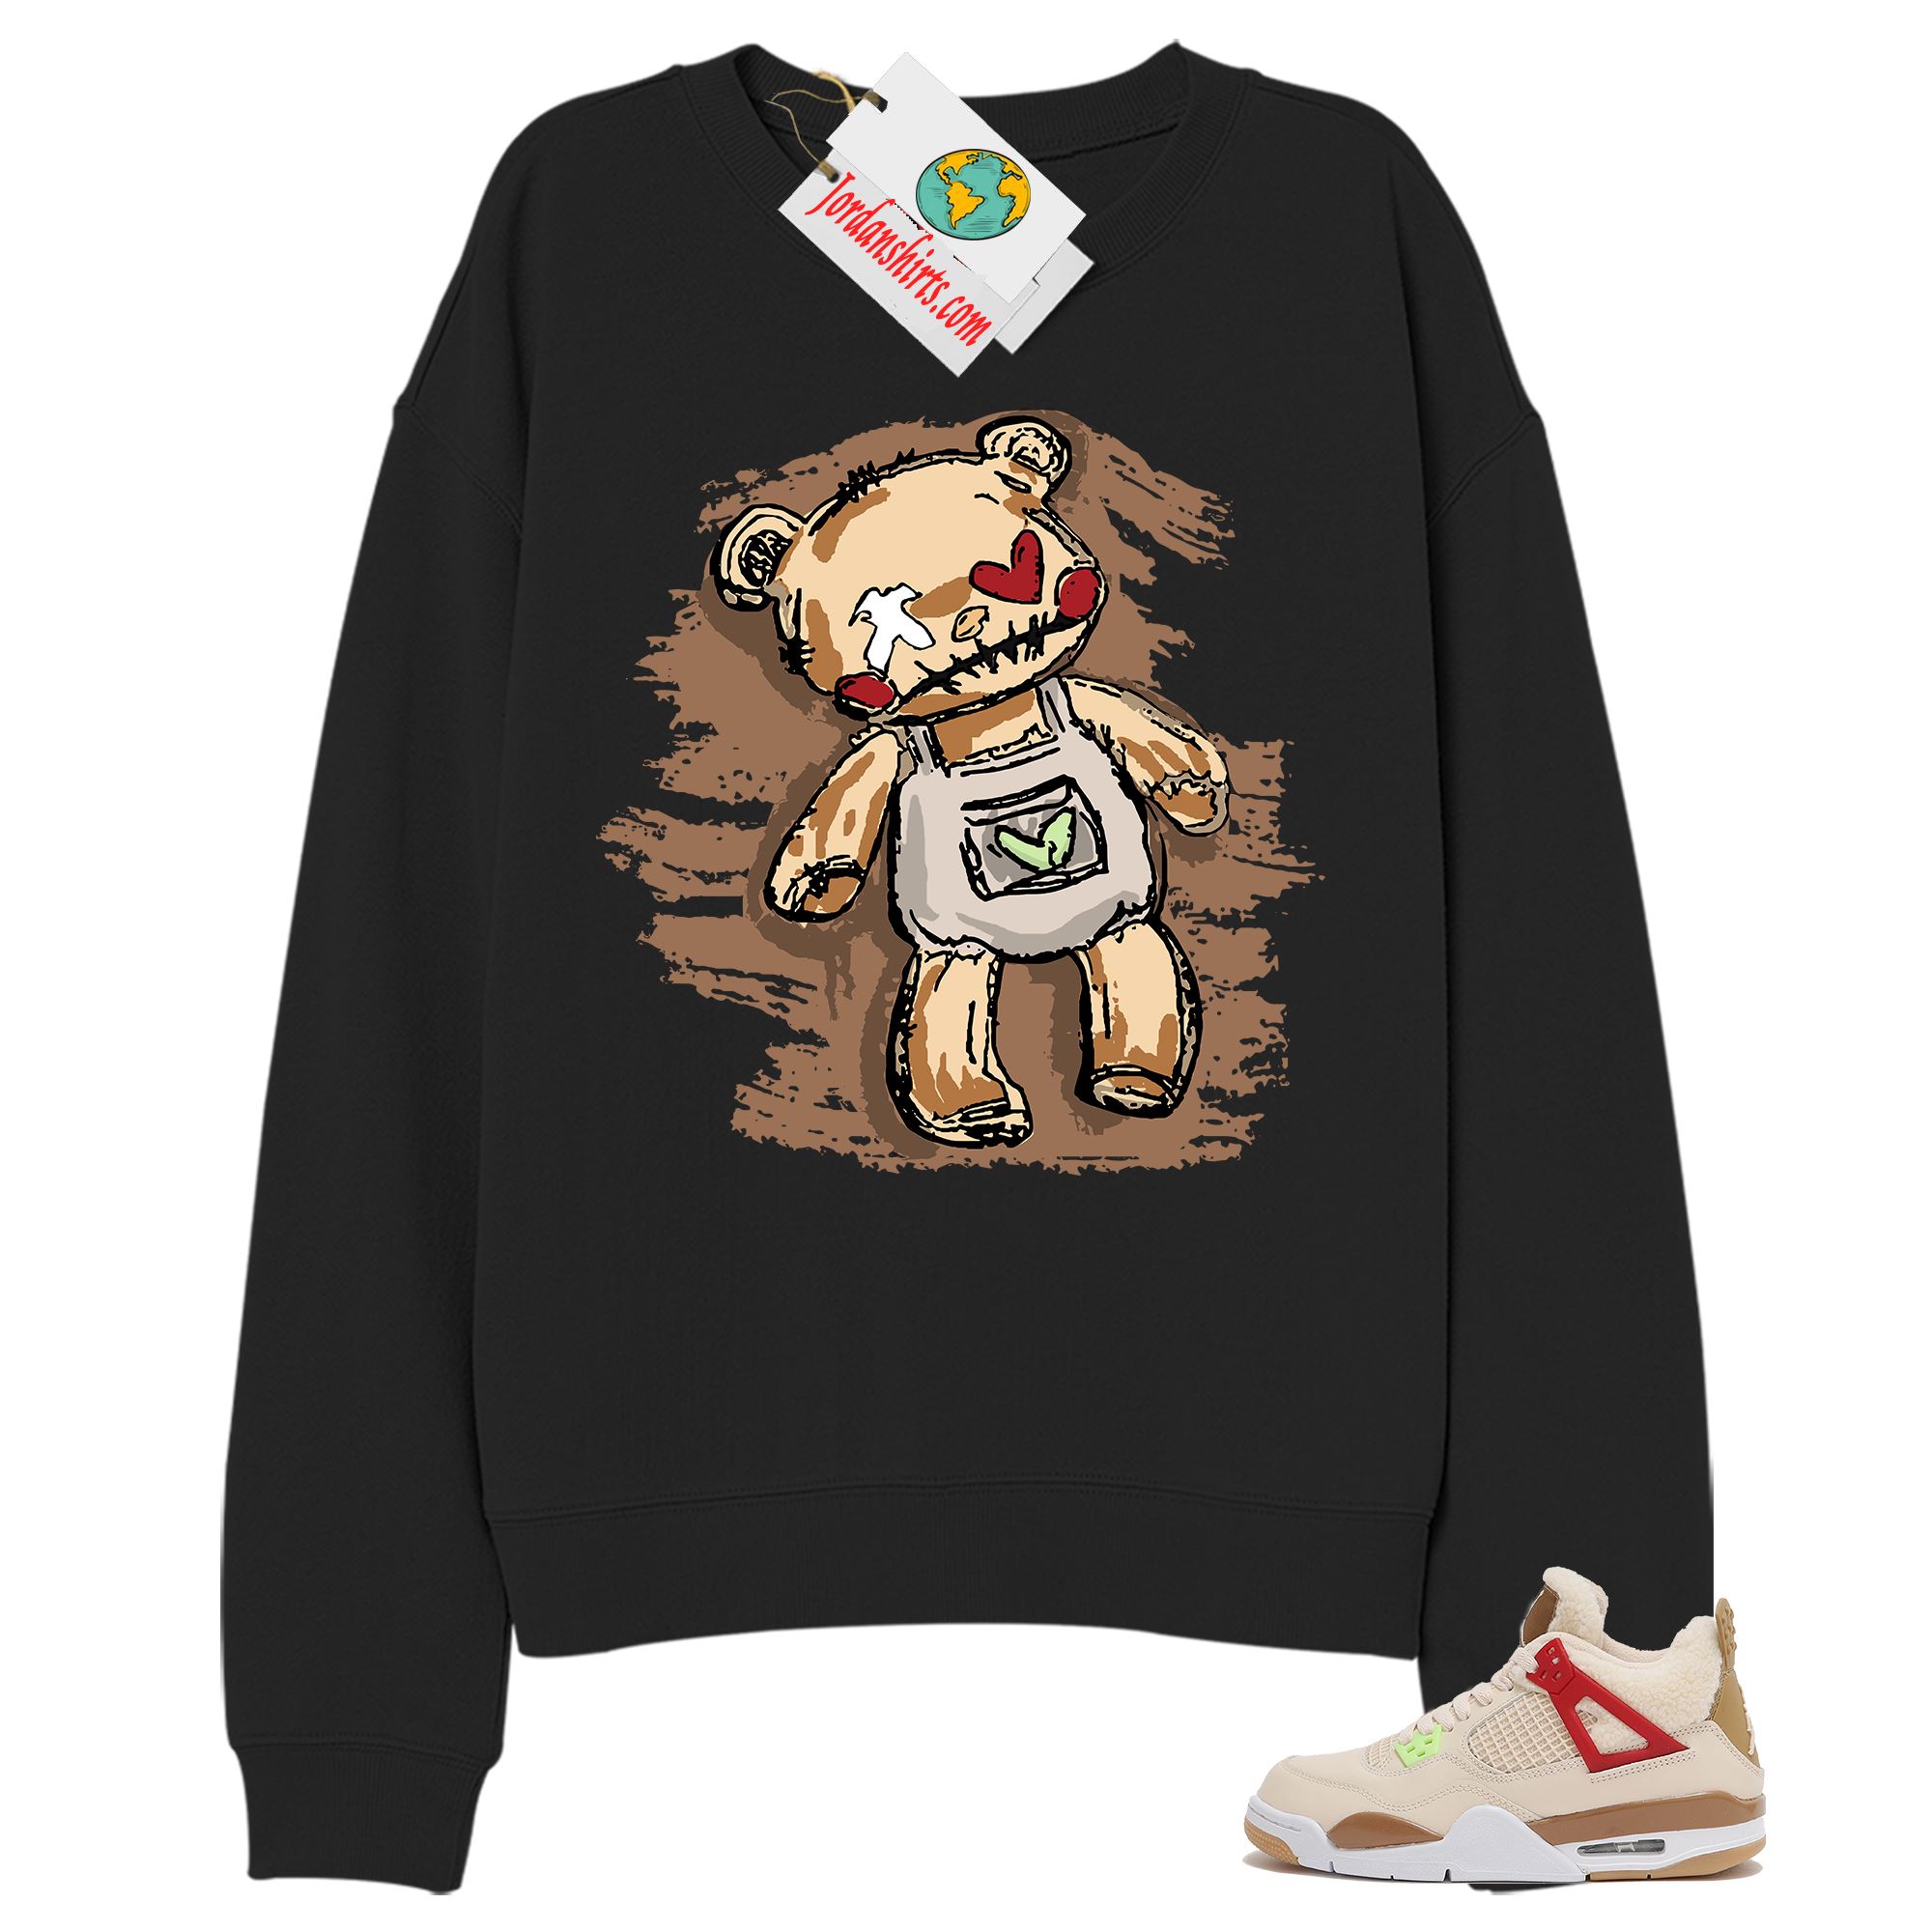 Jordan 4 Sweatshirt, Teddy Bear Broken Heart Black Sweatshirt Air Jordan 4 Wild Things 4s Size Up To 5xl